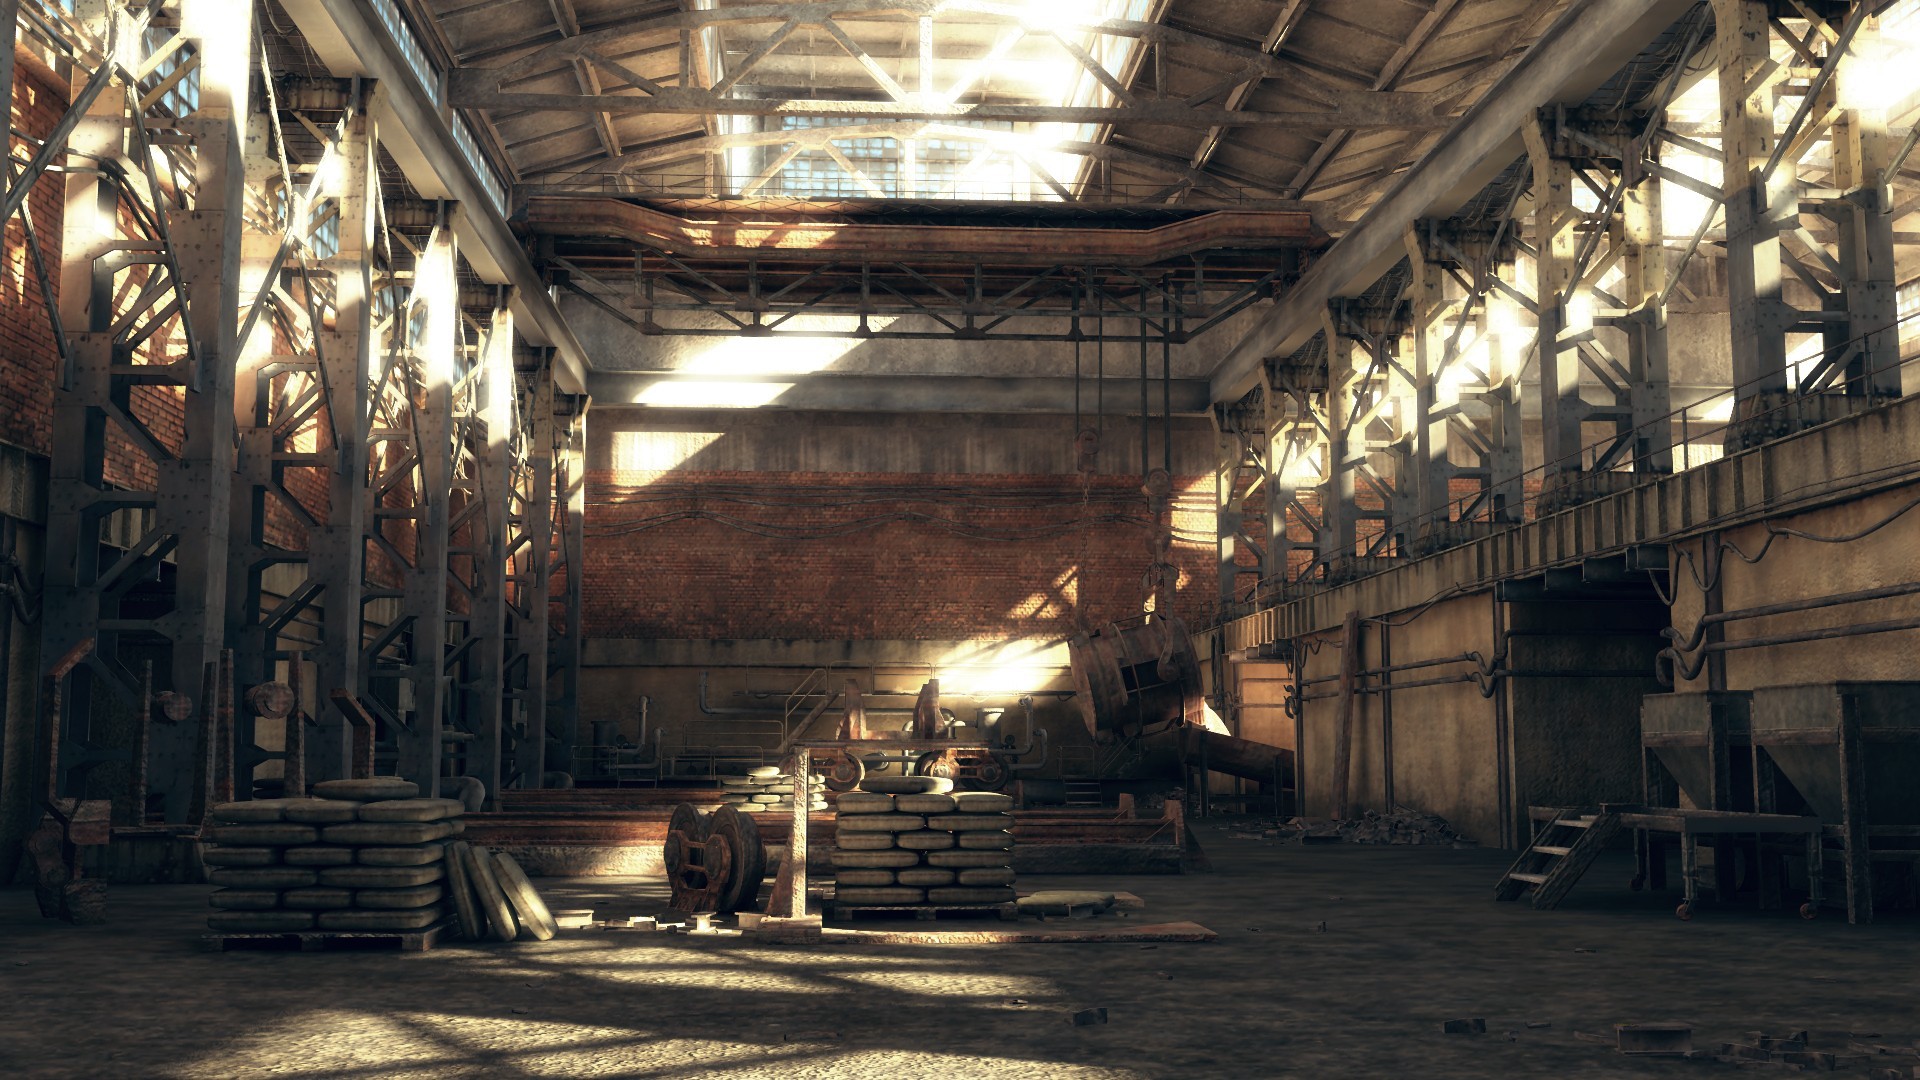 General 1920x1080 interior building factories abandoned